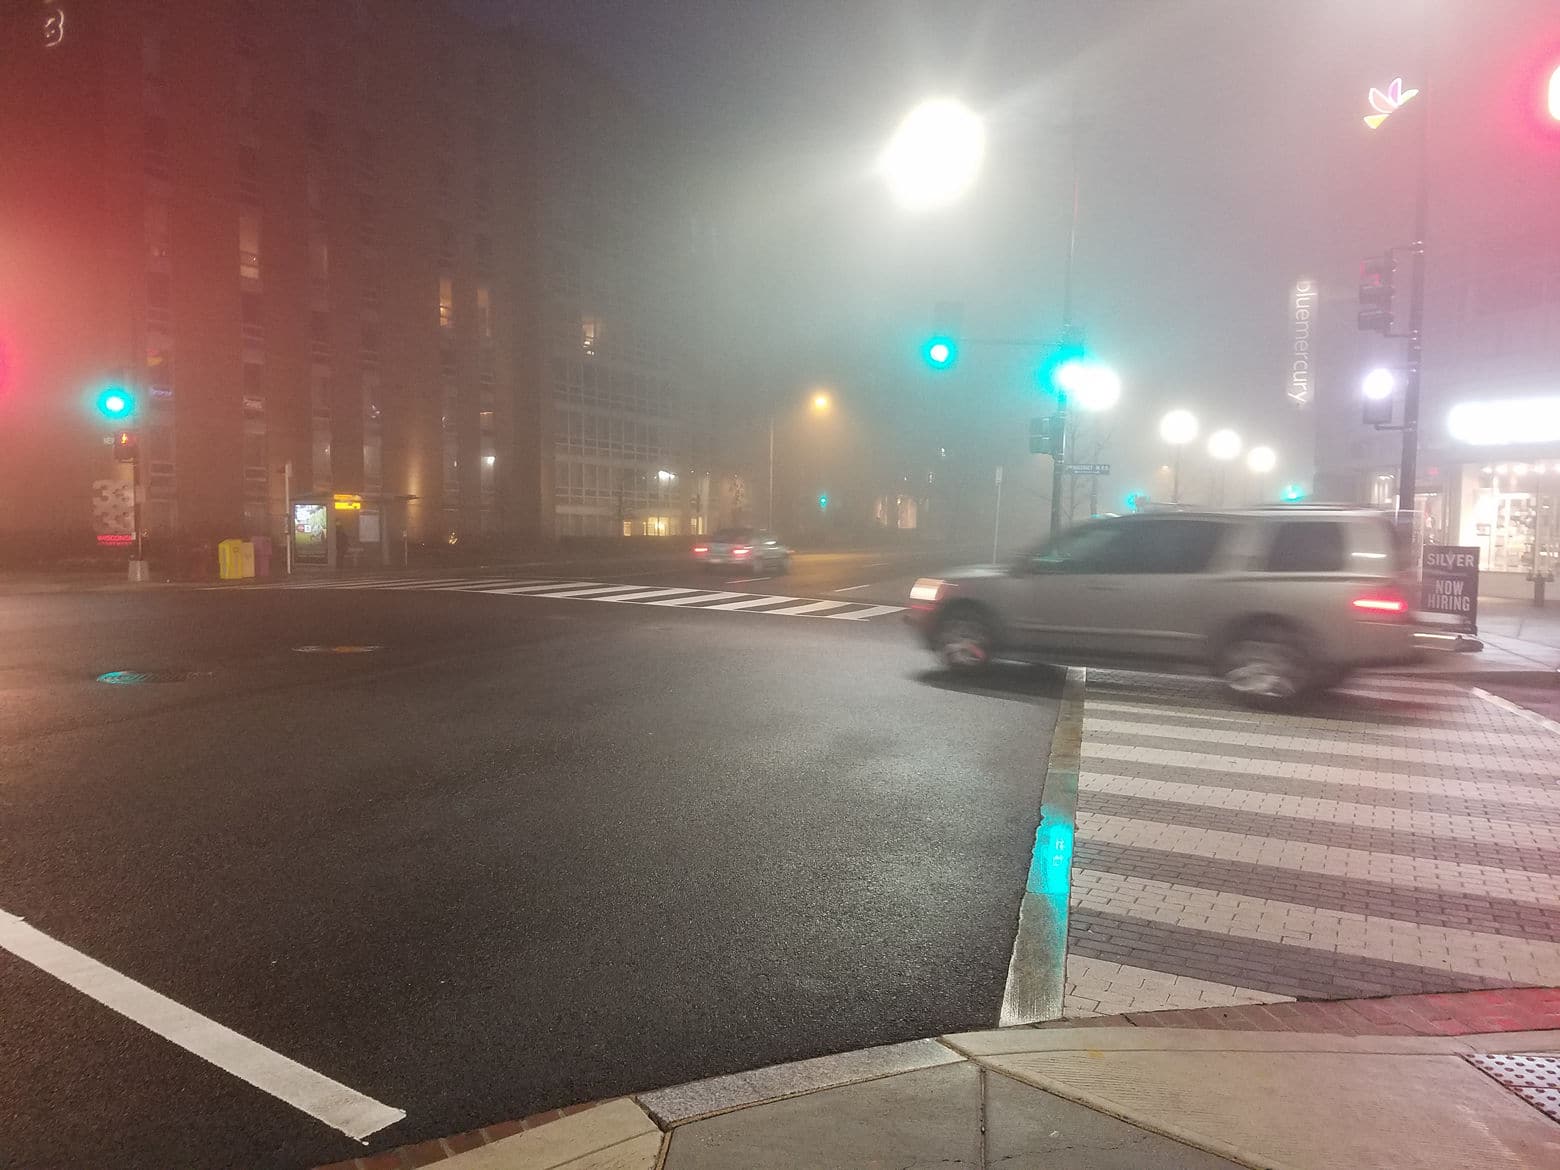 Dense fog covered the Washington area early Saturday morning. (WTOP/Will Vitka)